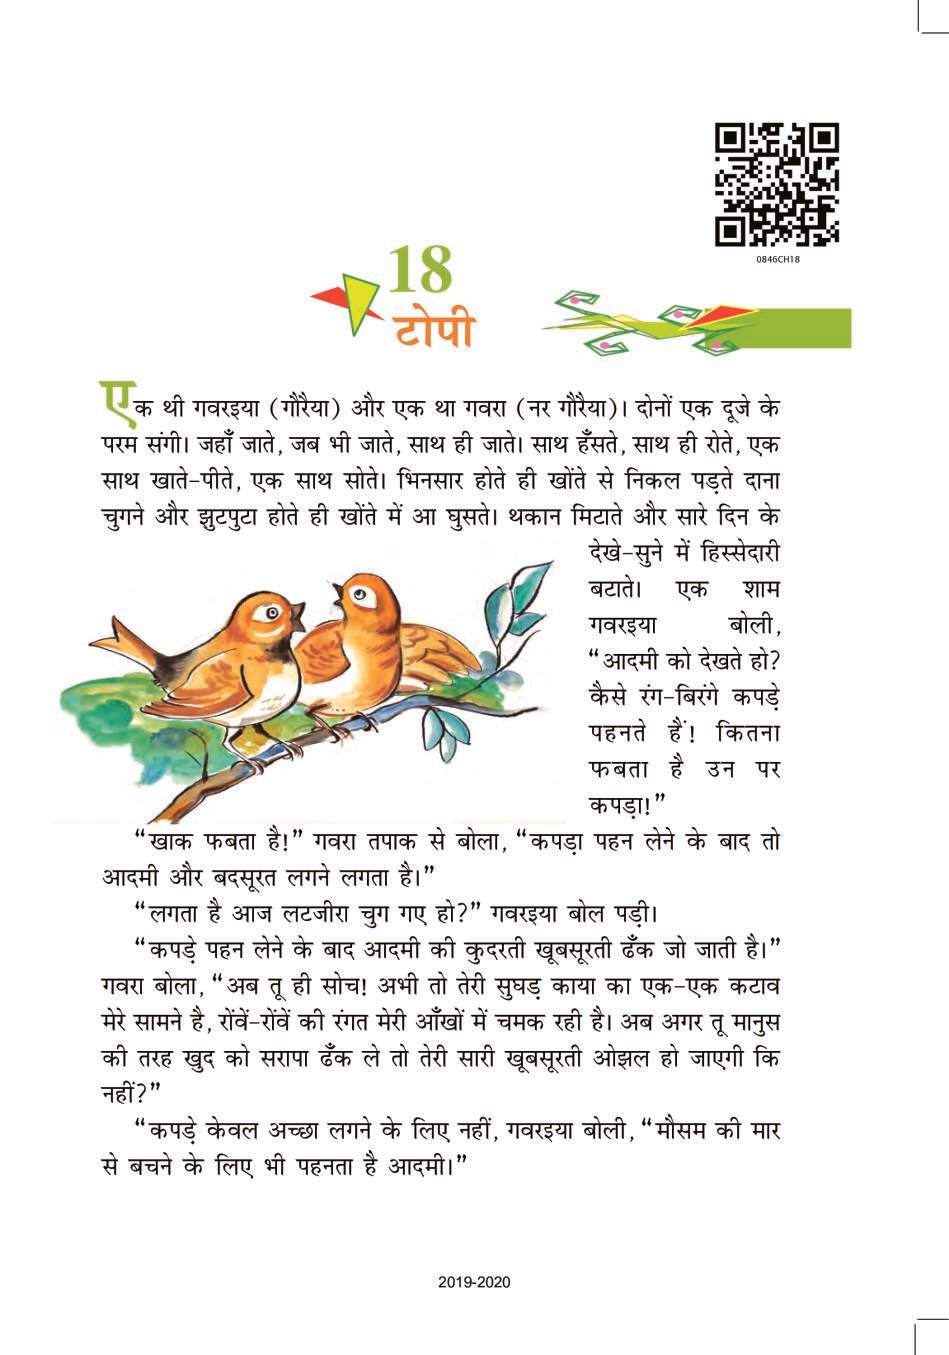 NCERT Book Class 8 Hindi (वसंत) Chapter 18 टोपी - Page 1